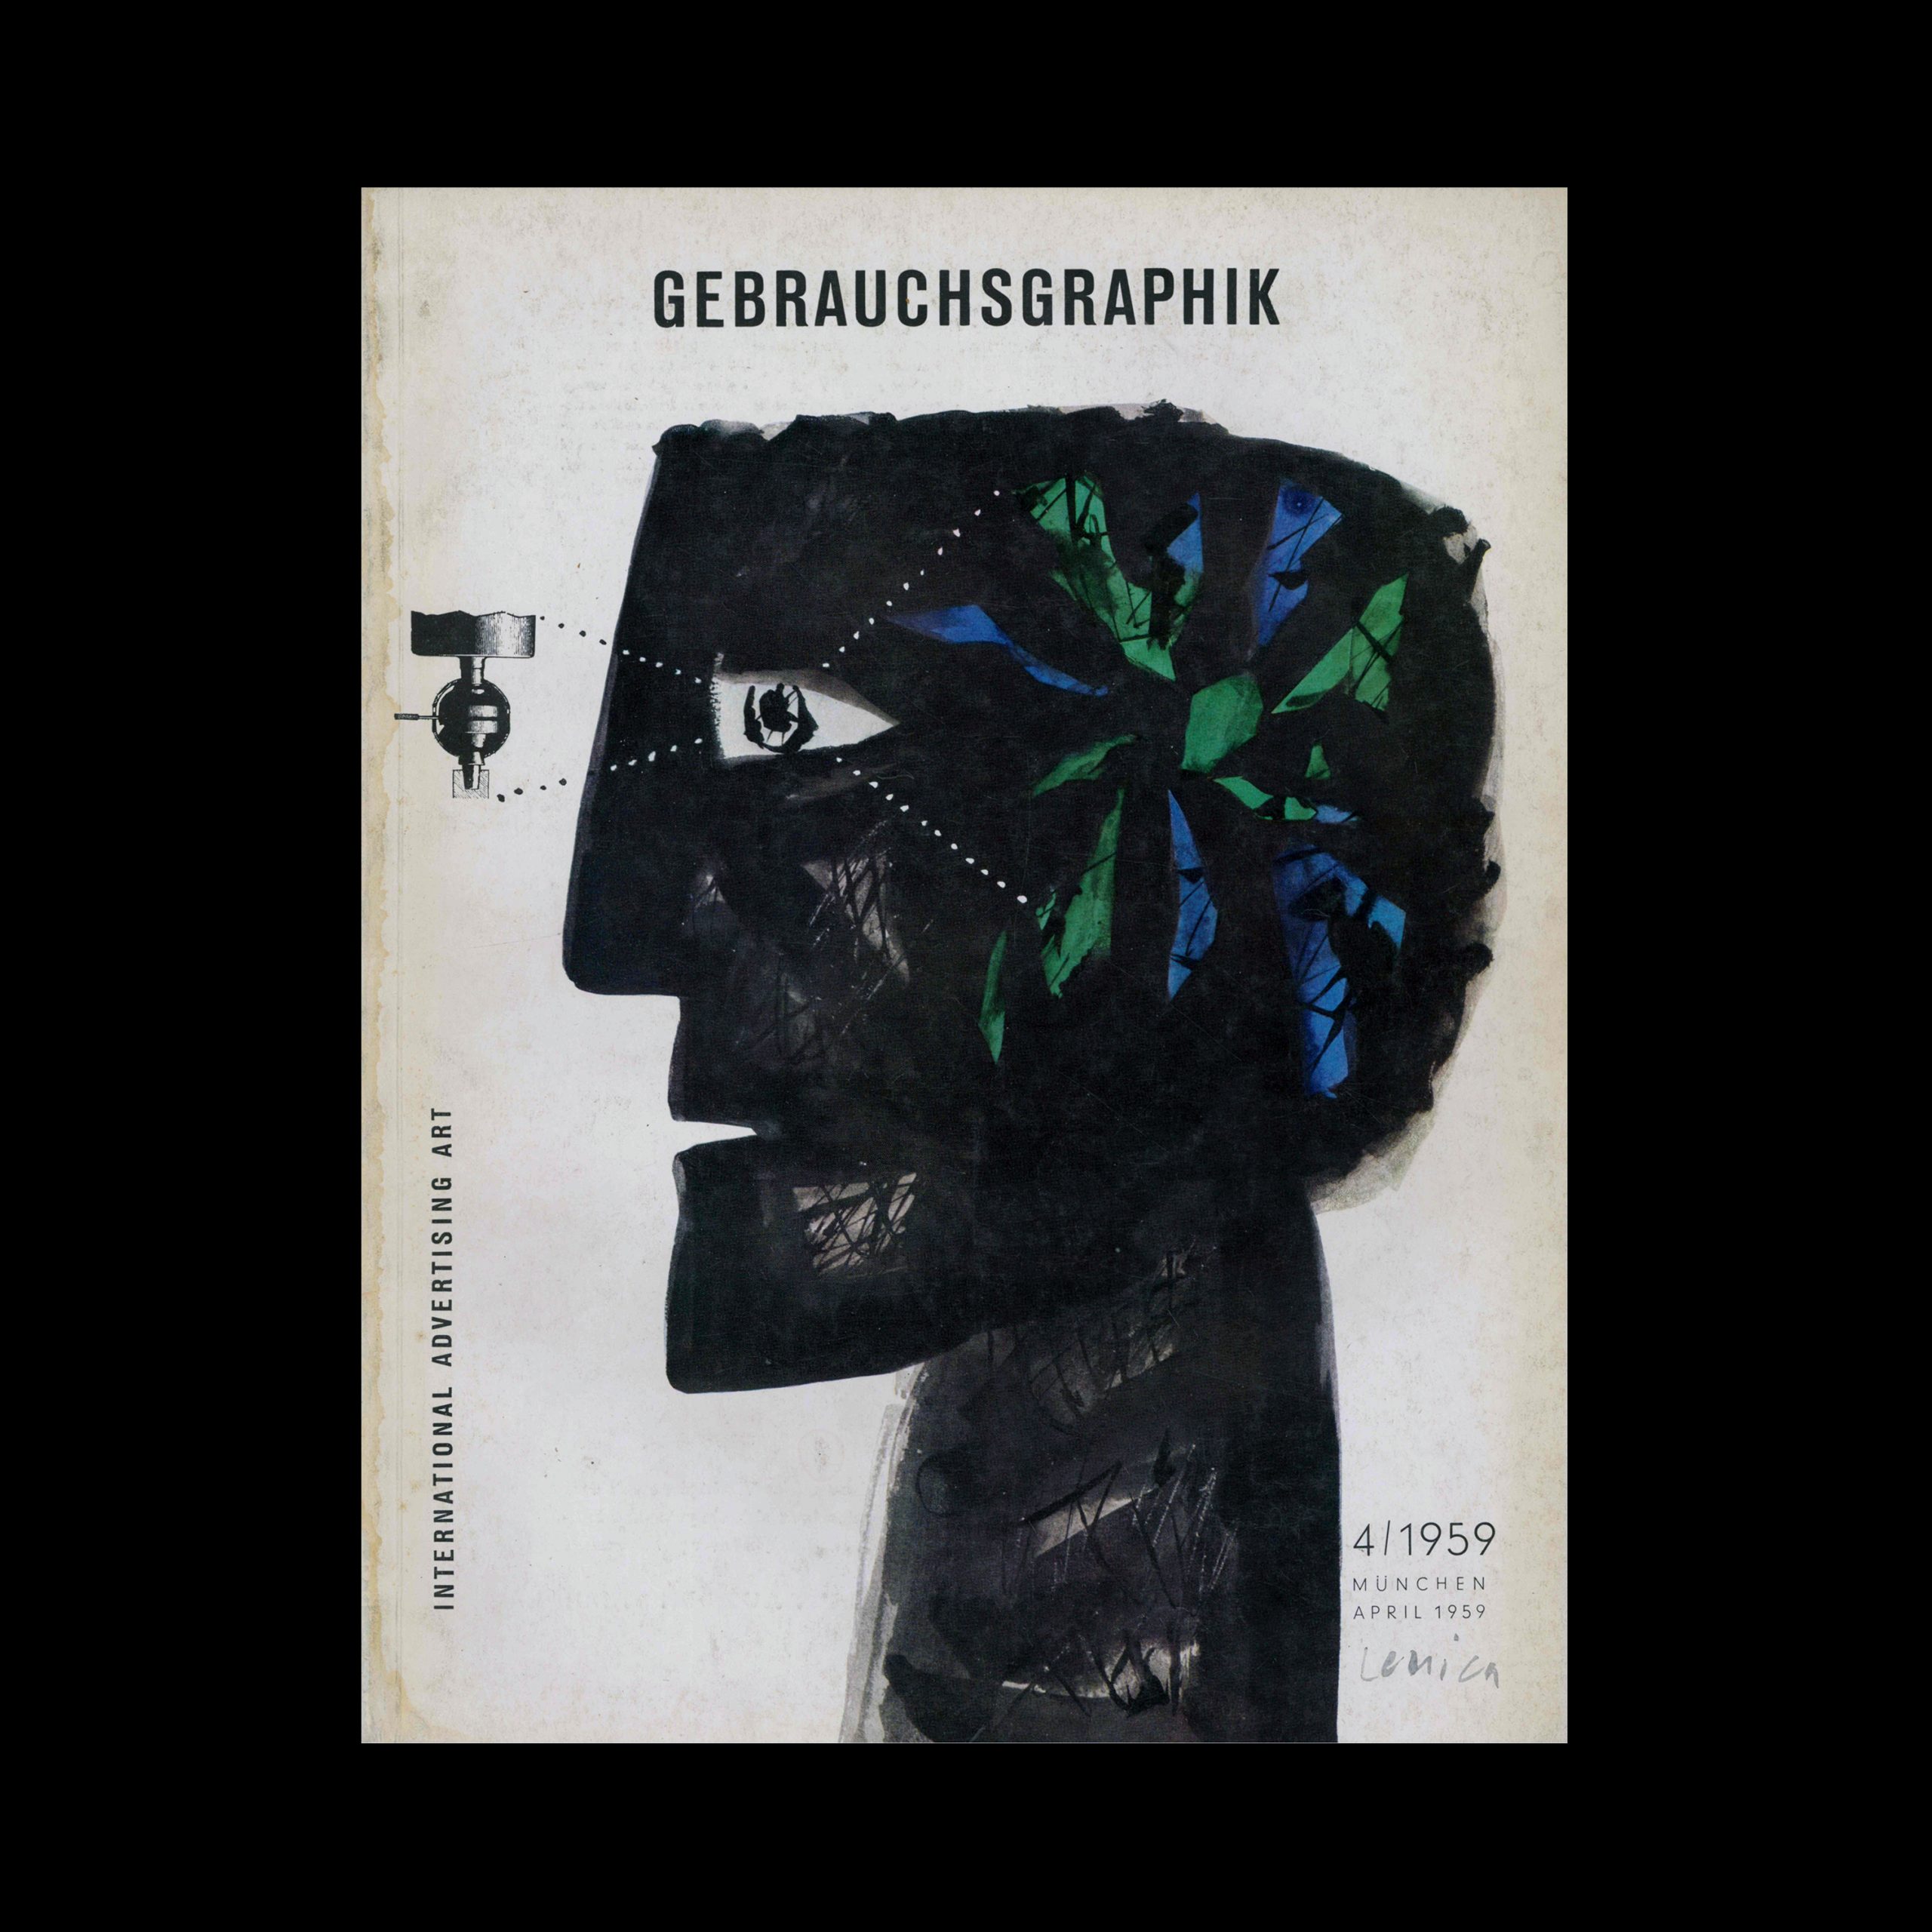 Gebrauchsgraphik, 4, 1959. Cover design by Jan Lenica